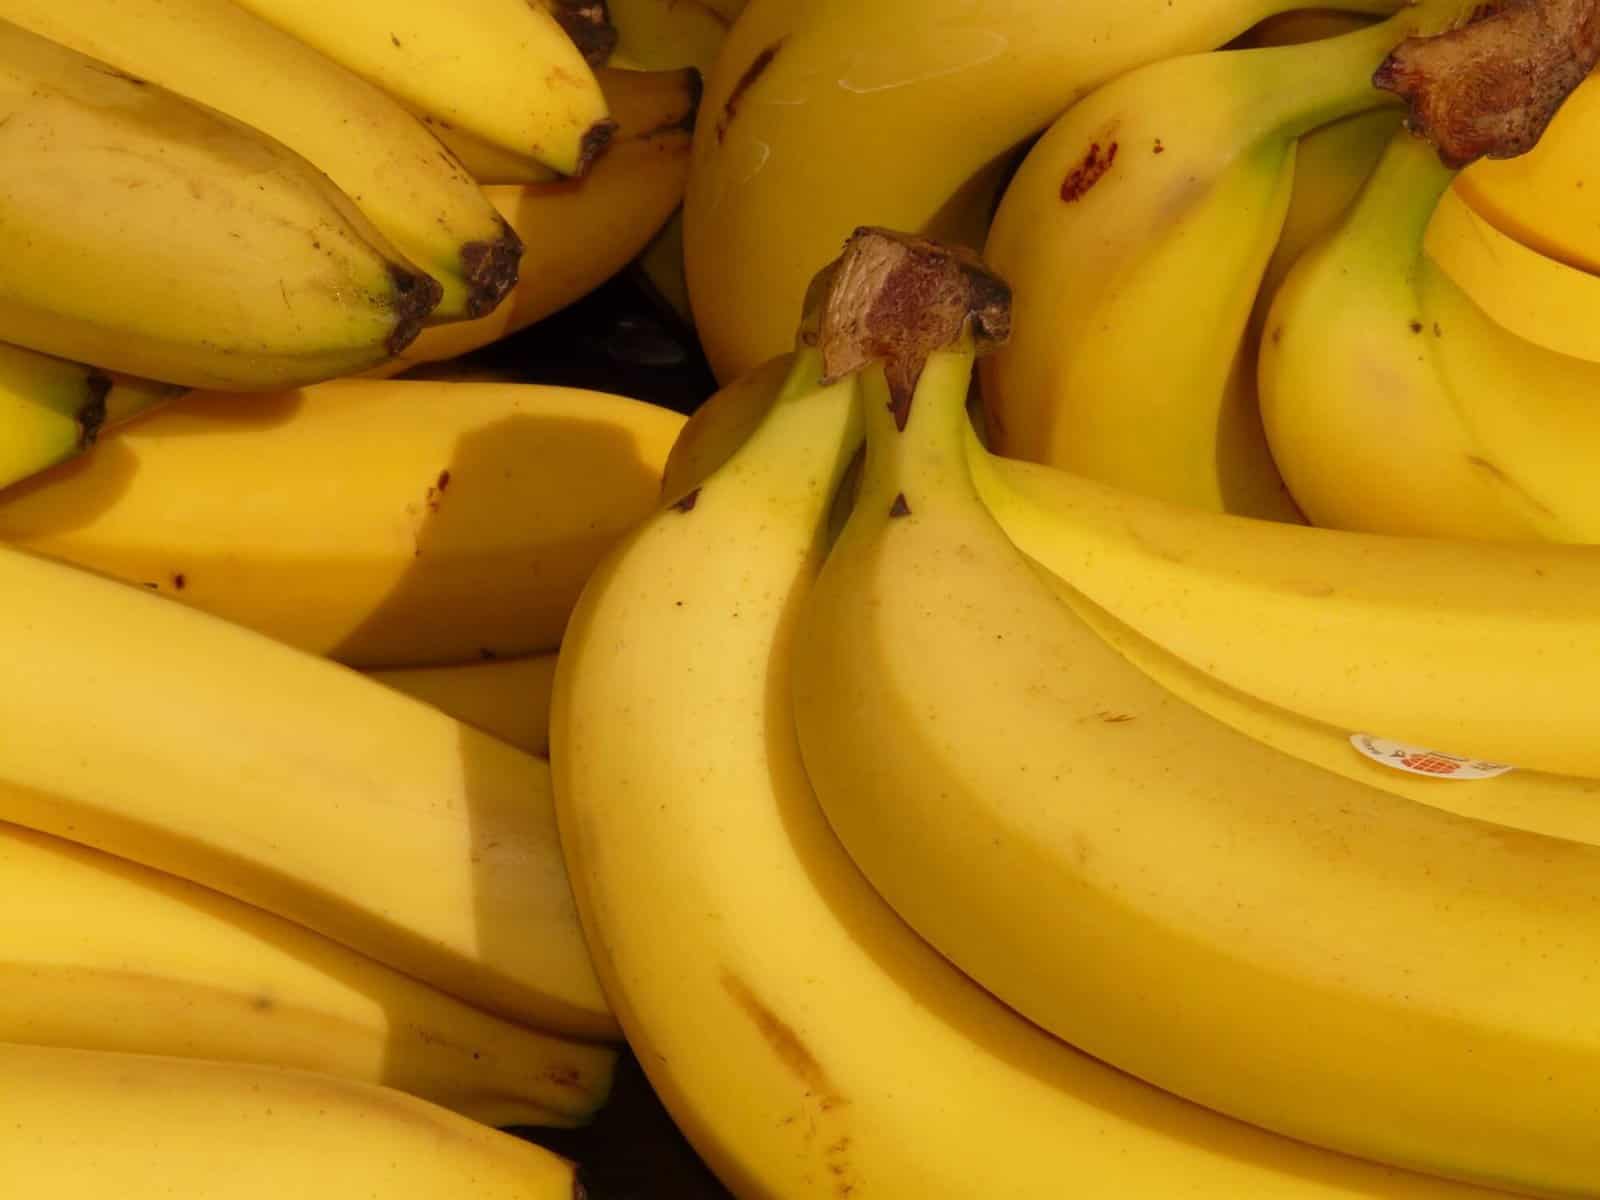 vegan banana recipes